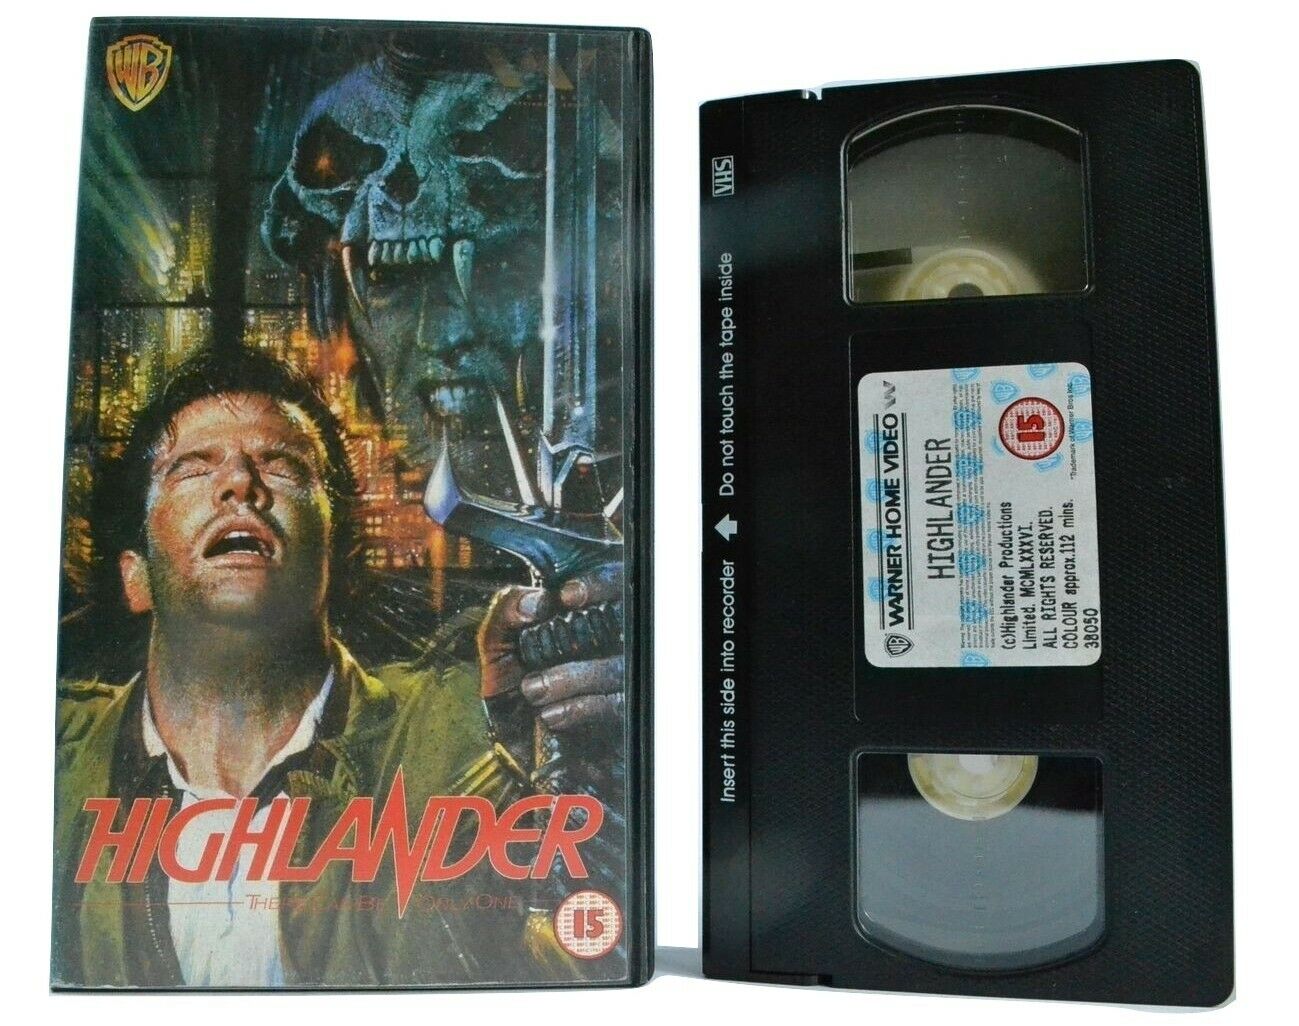 Highlander (1986): Action Fantasy - Christopher Lambert / Sean Connery - Pal VHS-